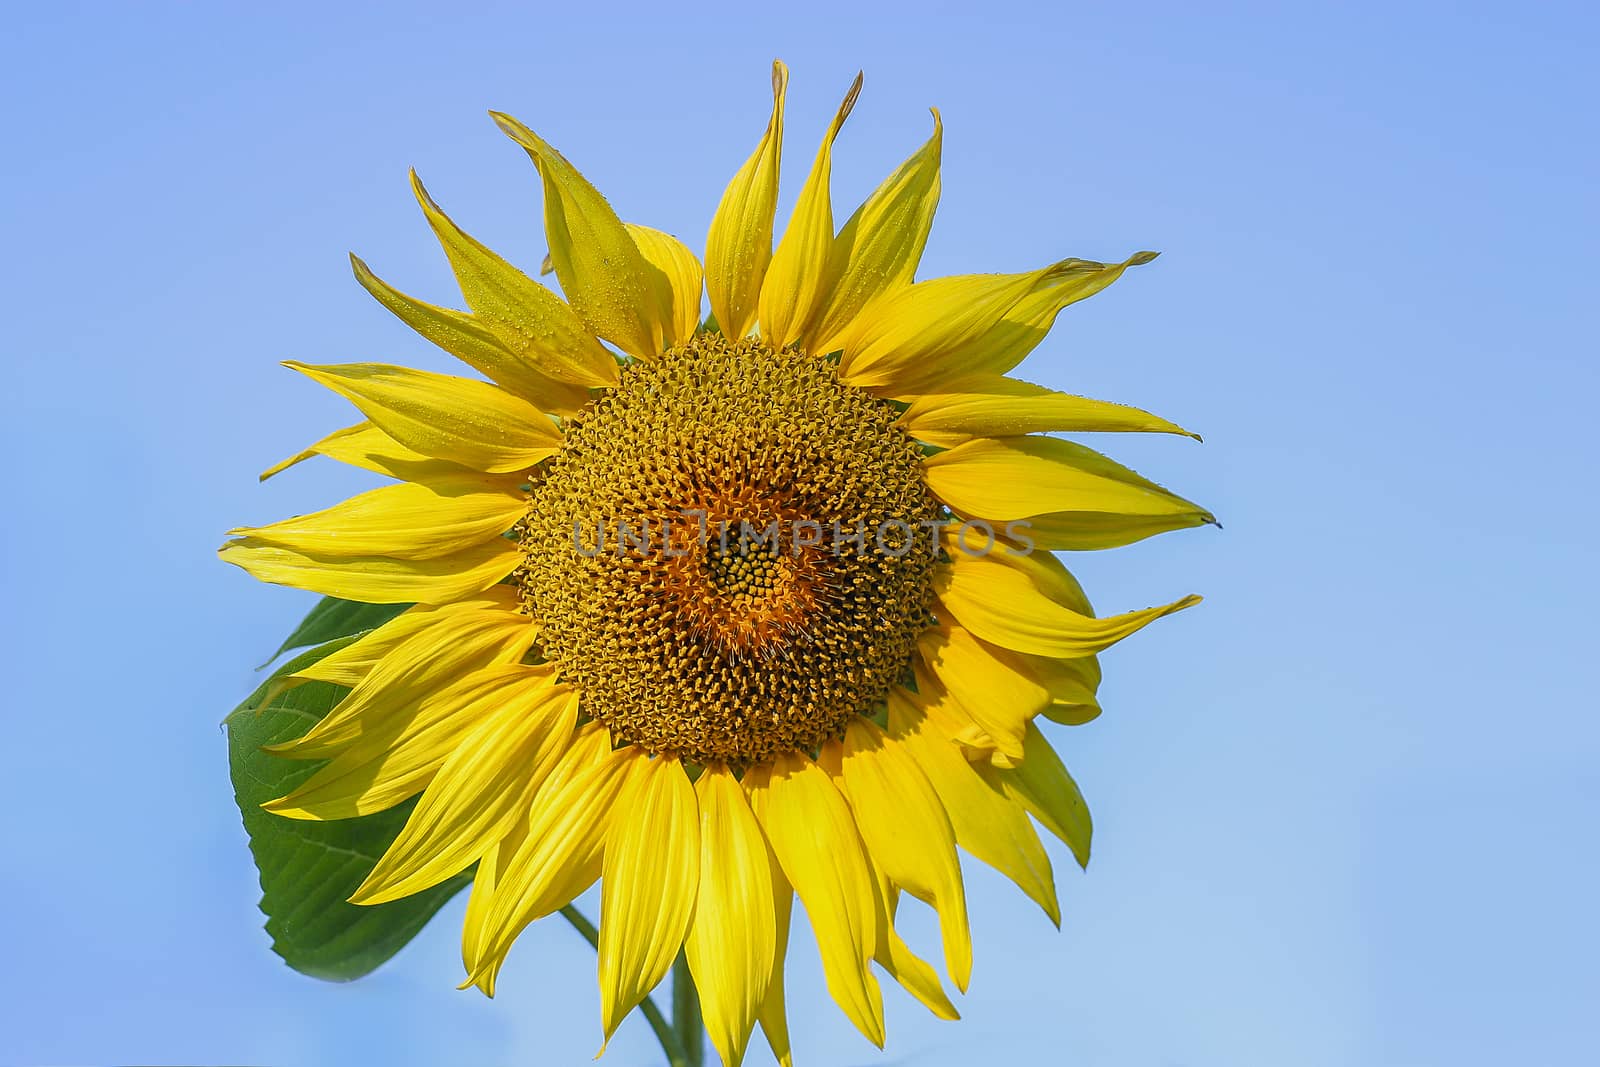 Sunflower head on the sky background